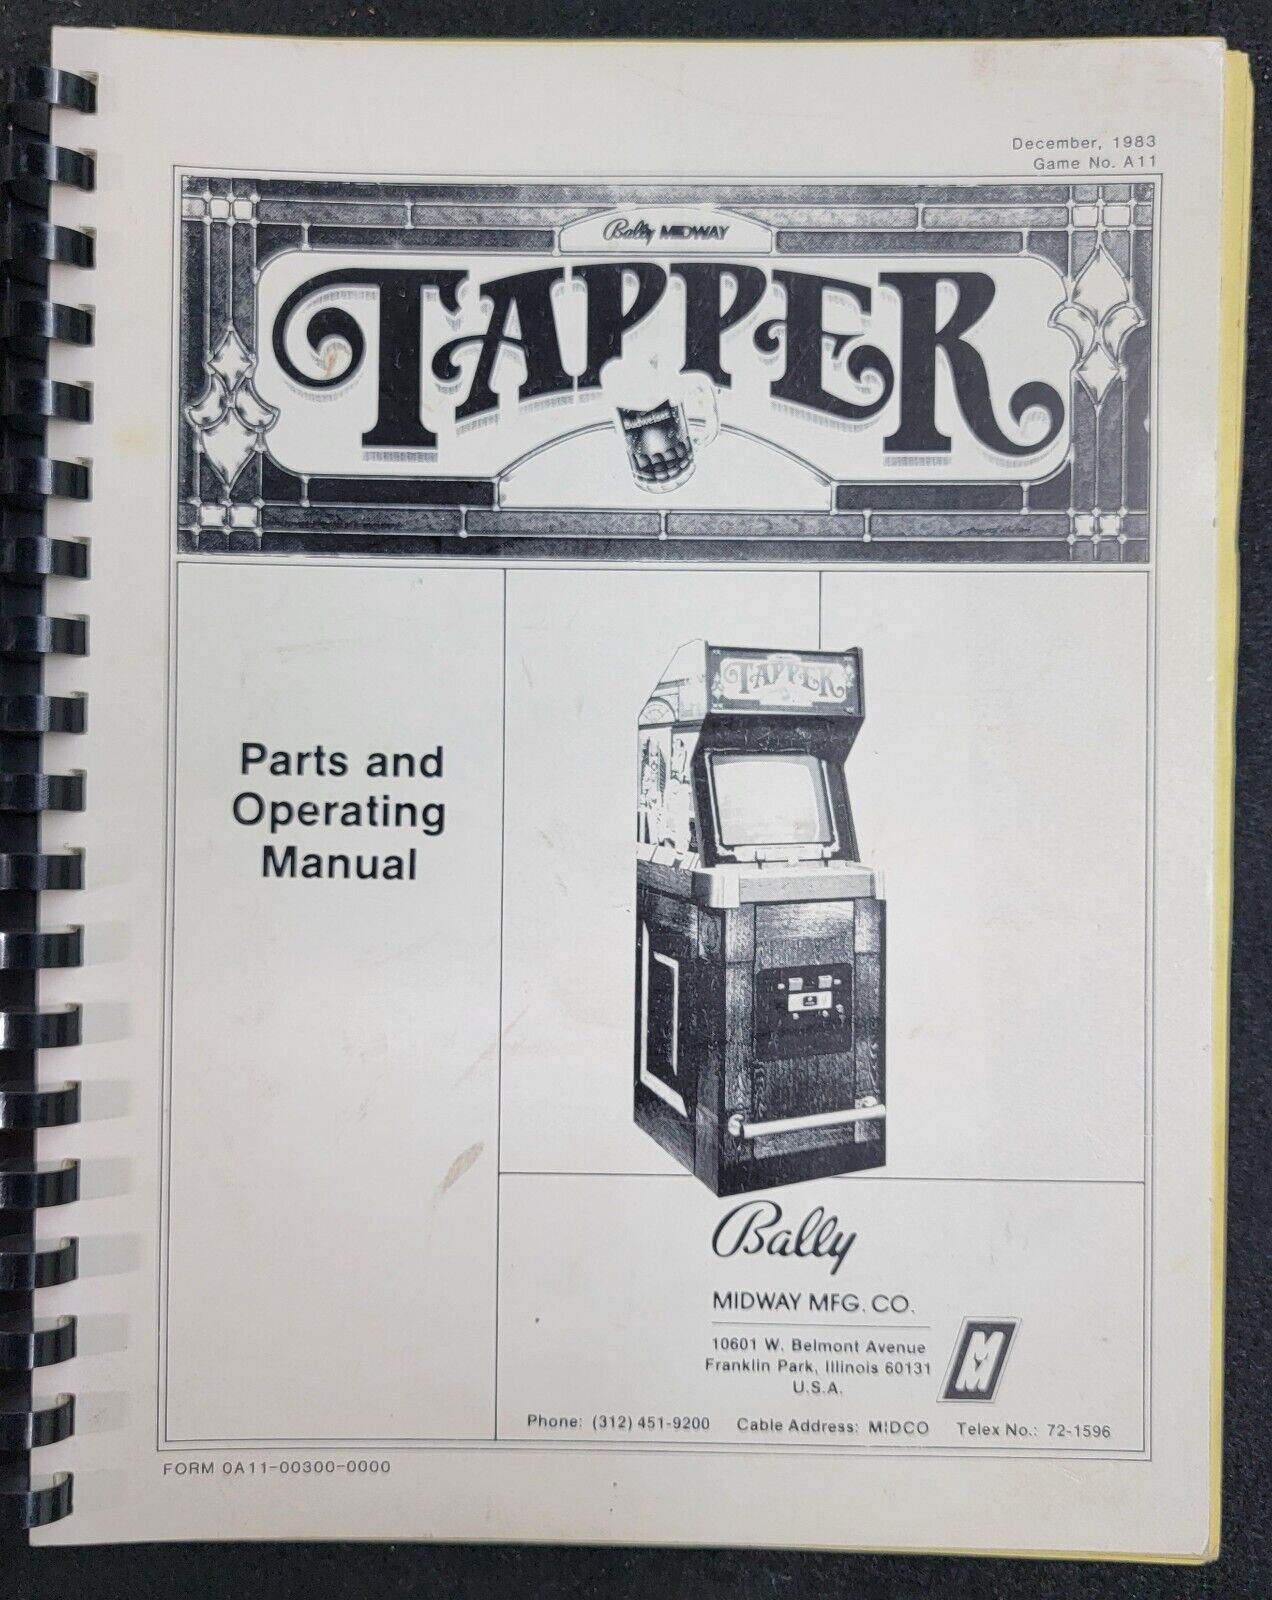 ORIGINAL Tapper Bally Midway Arcade Game Manual Vintage 1983